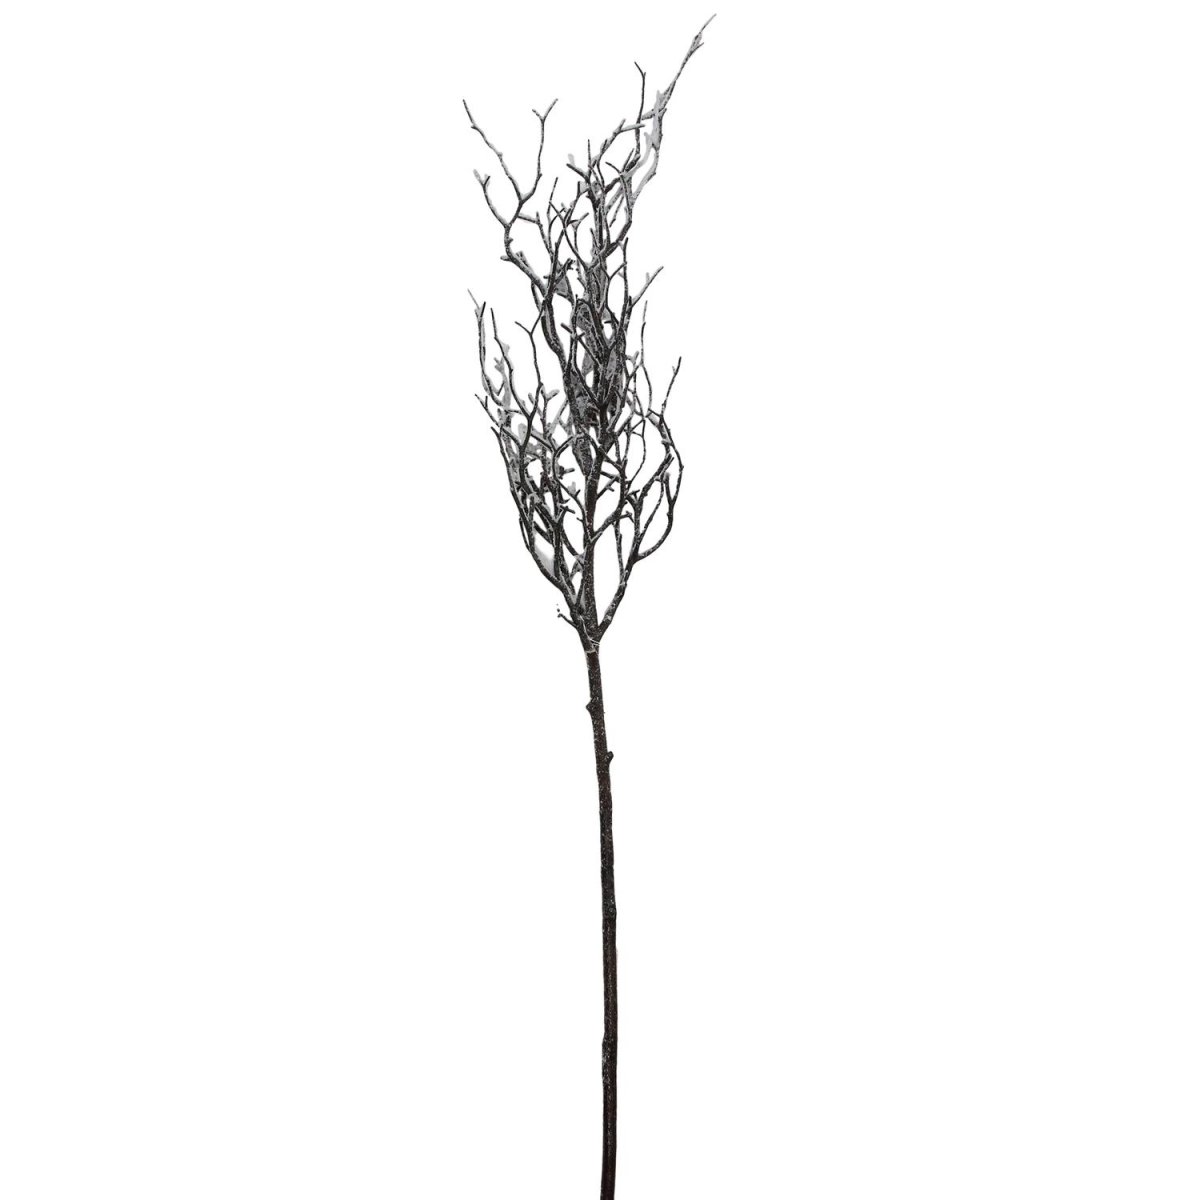 32626962 43 In. Decorative Artificial Poplar Tree Branch